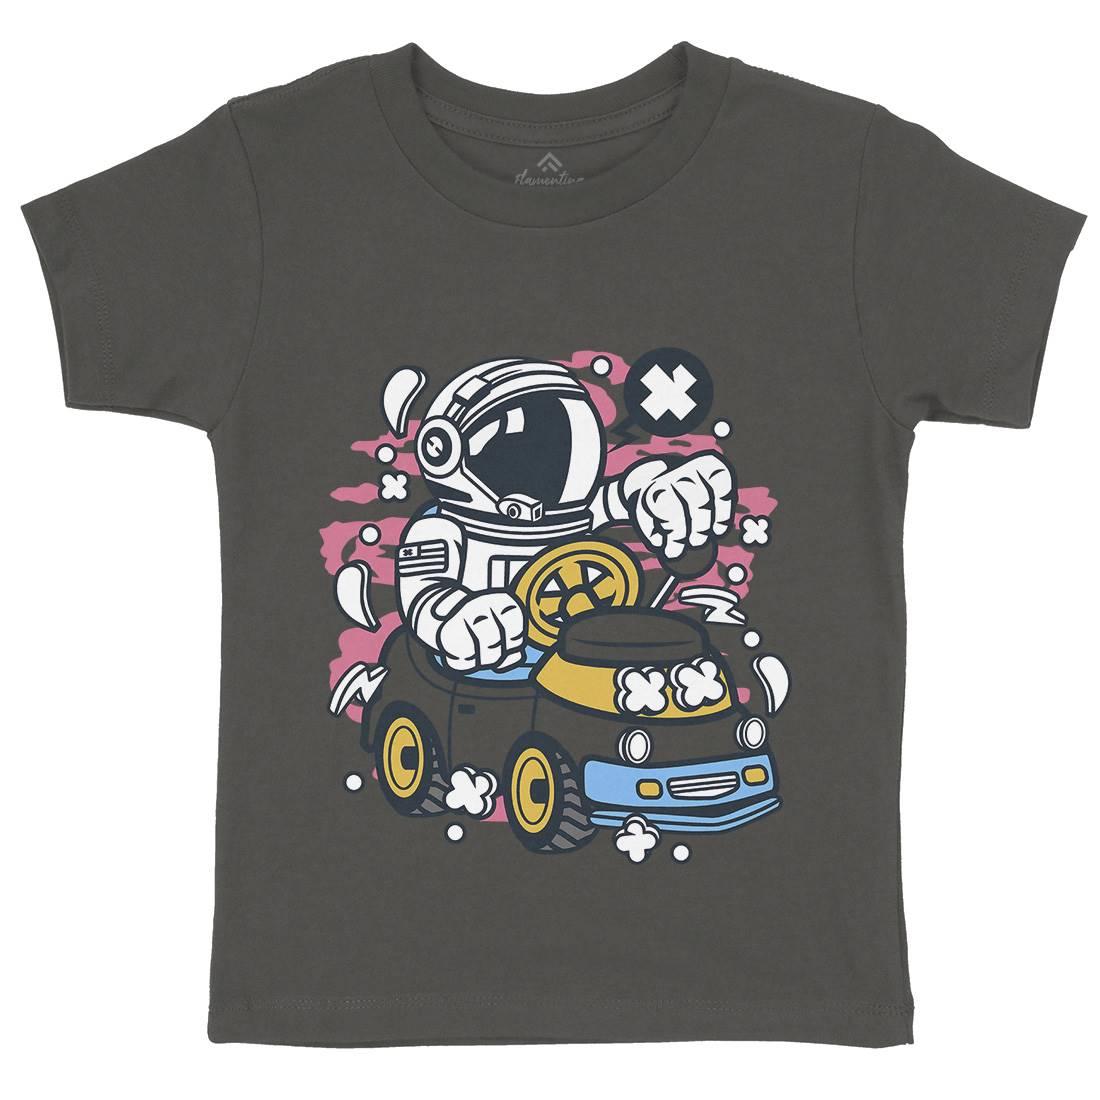 Car Toy Kids Crew Neck T-Shirt Cars C045